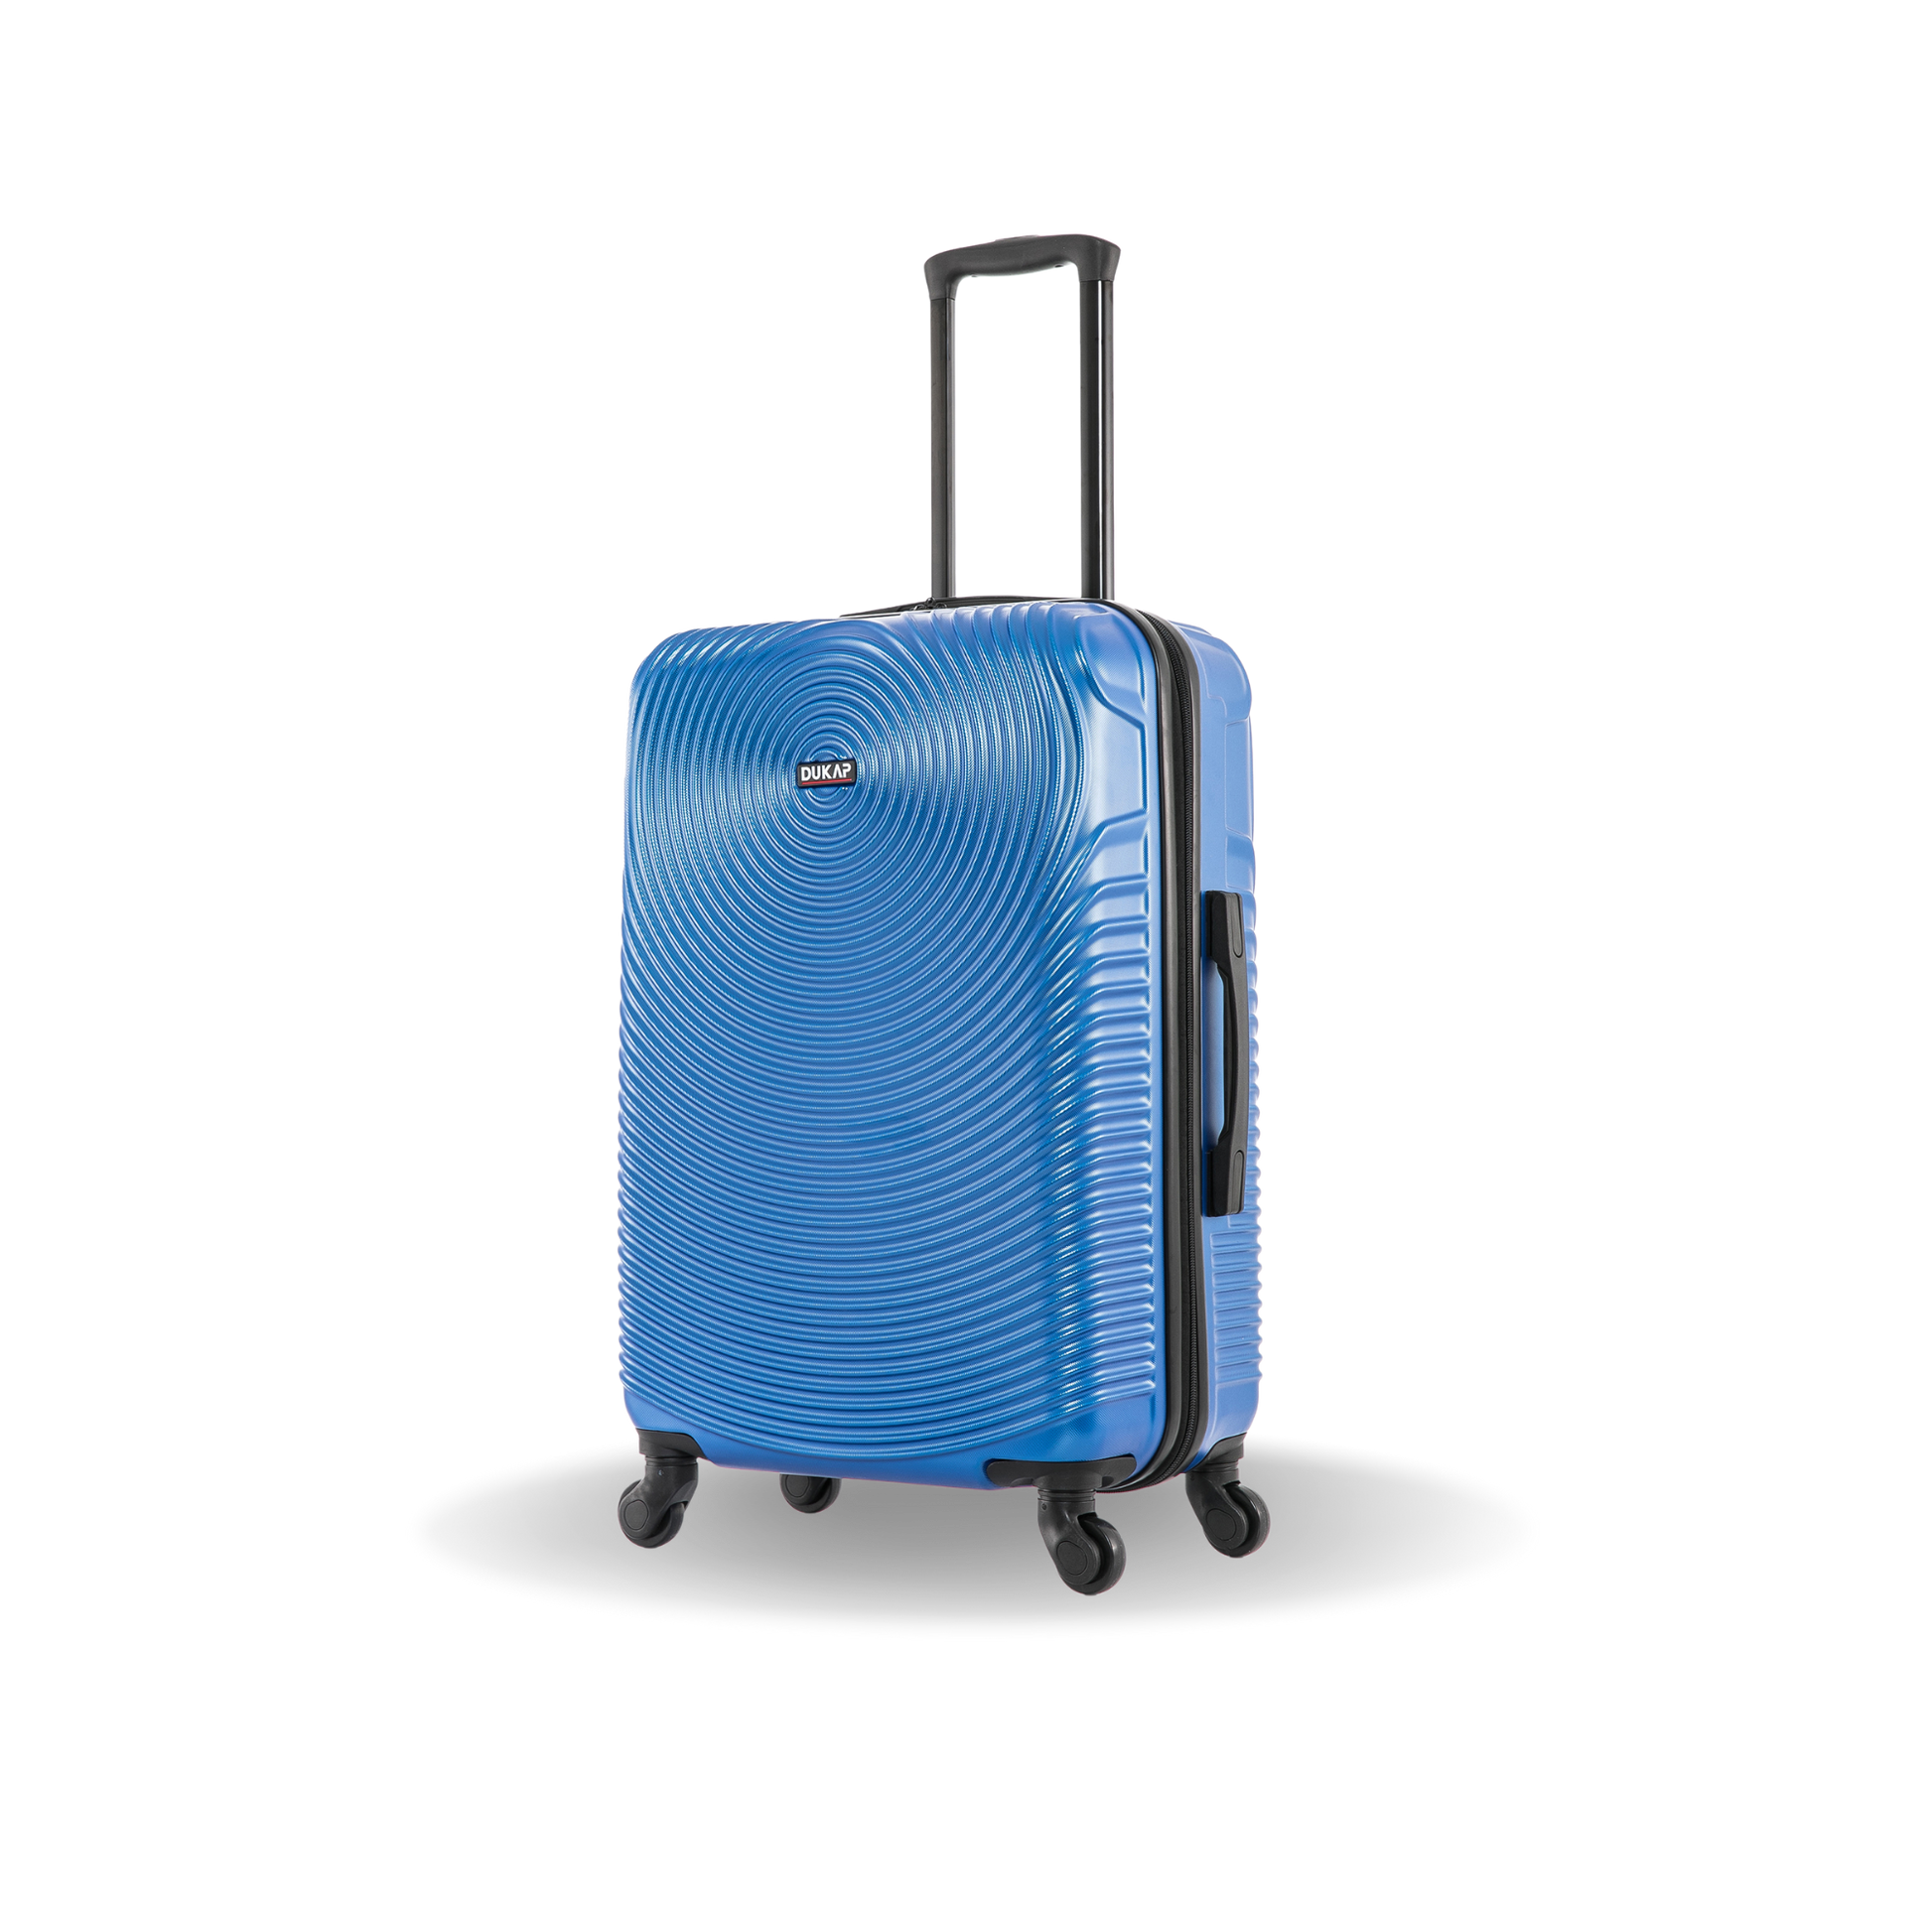 INCEPTION Hardside Spinner 24-Inch Medium Luggage